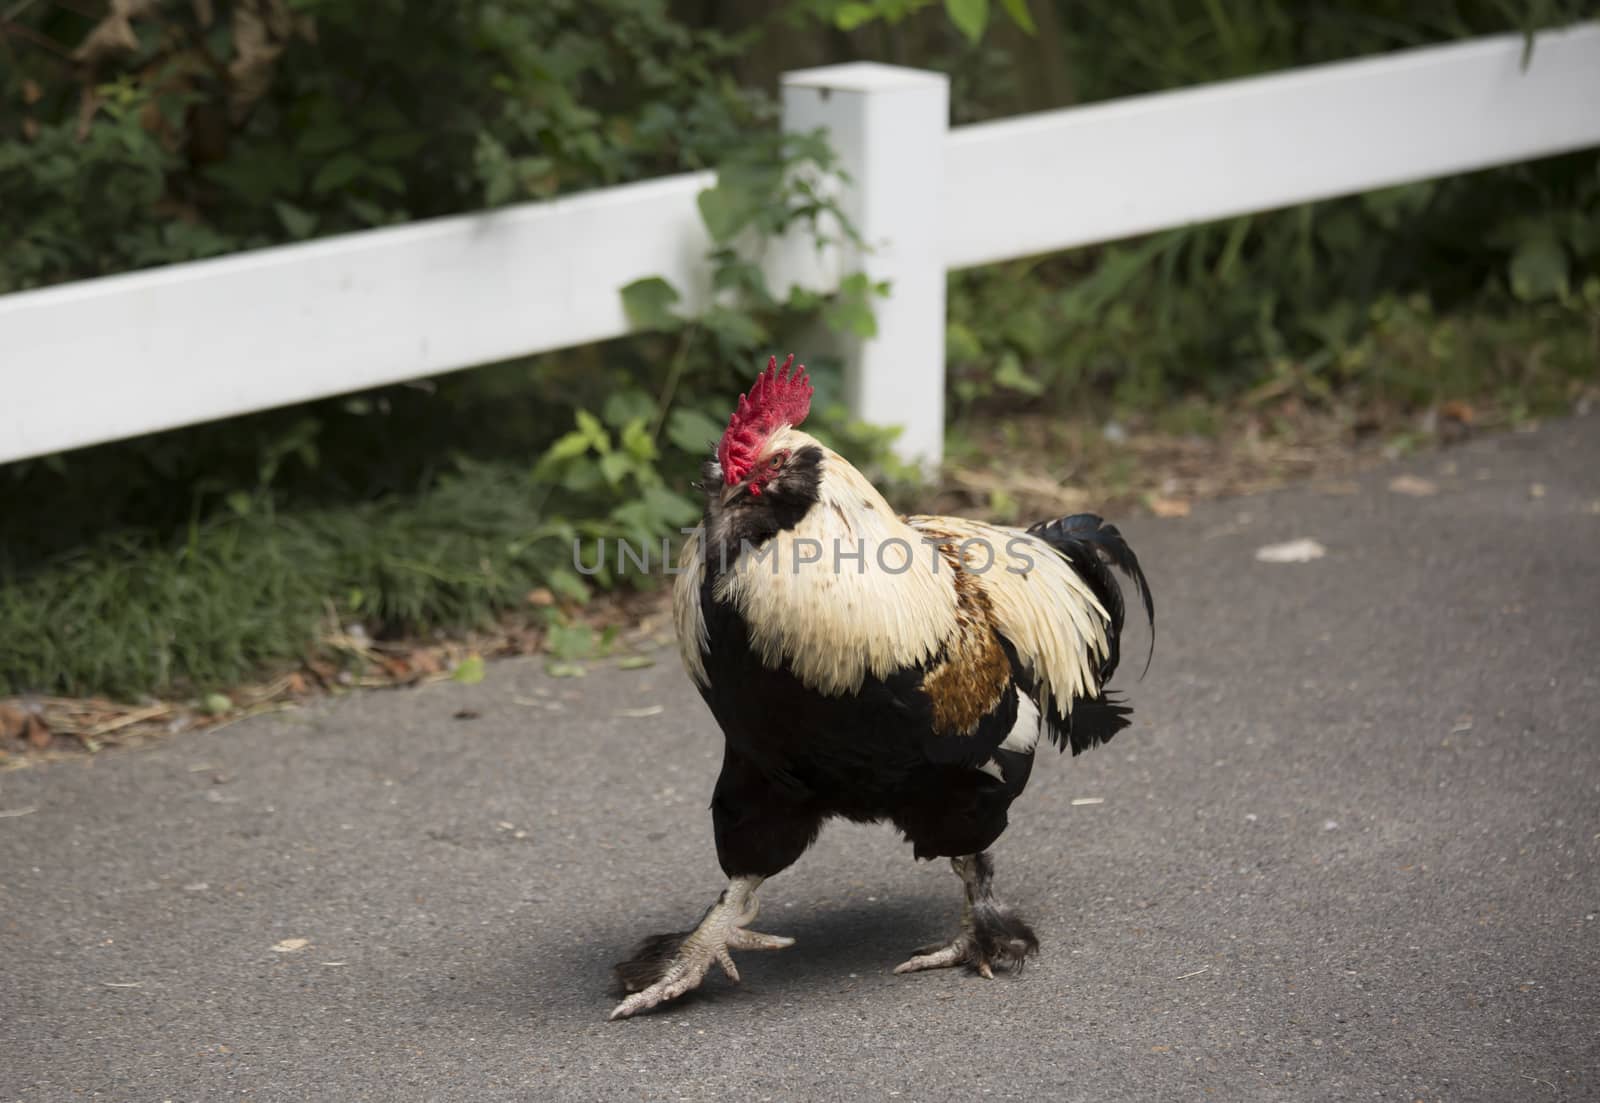 Free range Faverolle rooster